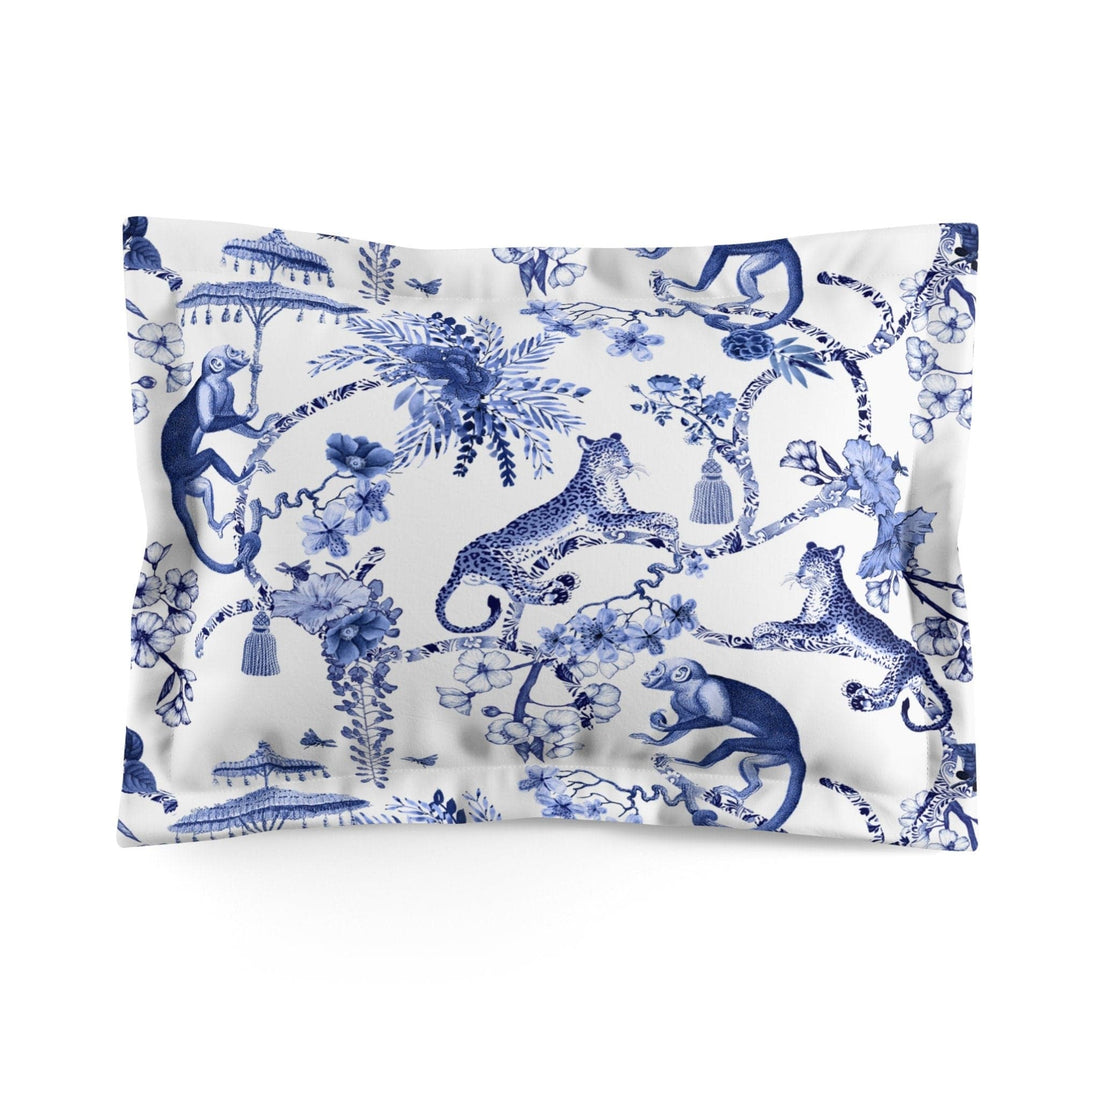 Kate McEnroe New York Chinoiserie Pillow Sham, Botanical Toile Bedding Collection, Chinoiserie Toile Bed Pillows, Floral Blue and White Chinoiserie Jungle Pillow Shams